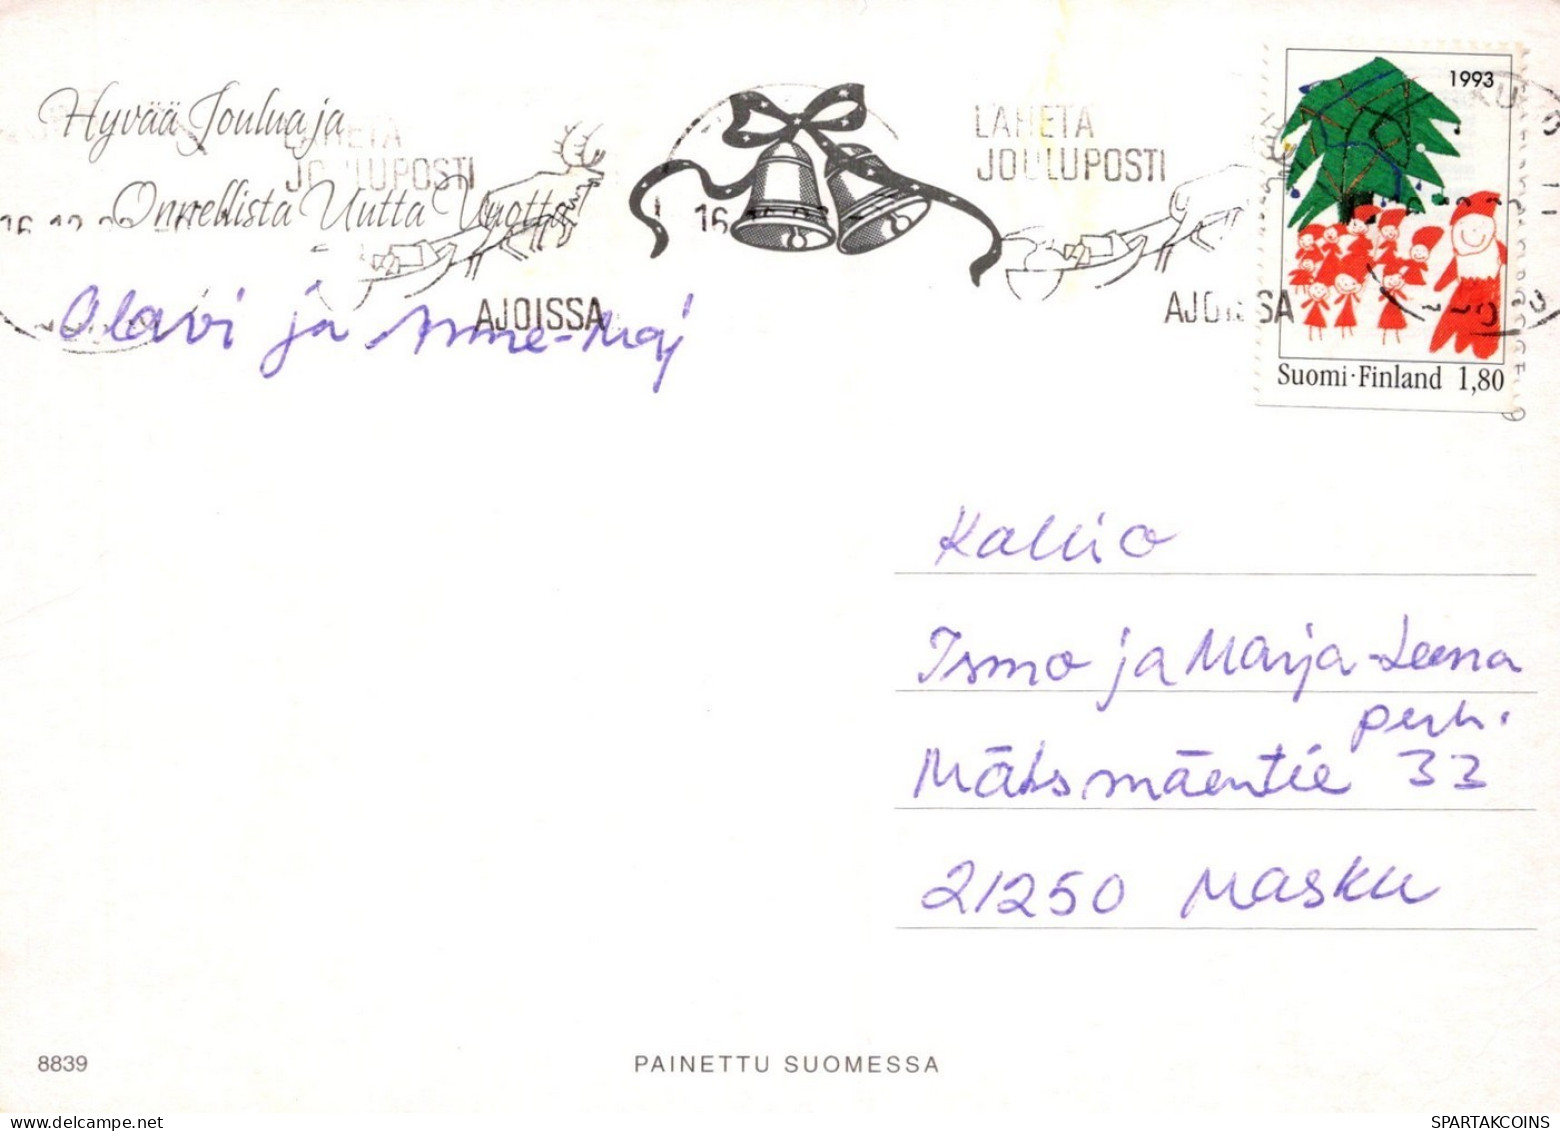 SANTA CLAUS CHRISTMAS Holidays Vintage Postcard CPSM #PAJ898.GB - Santa Claus